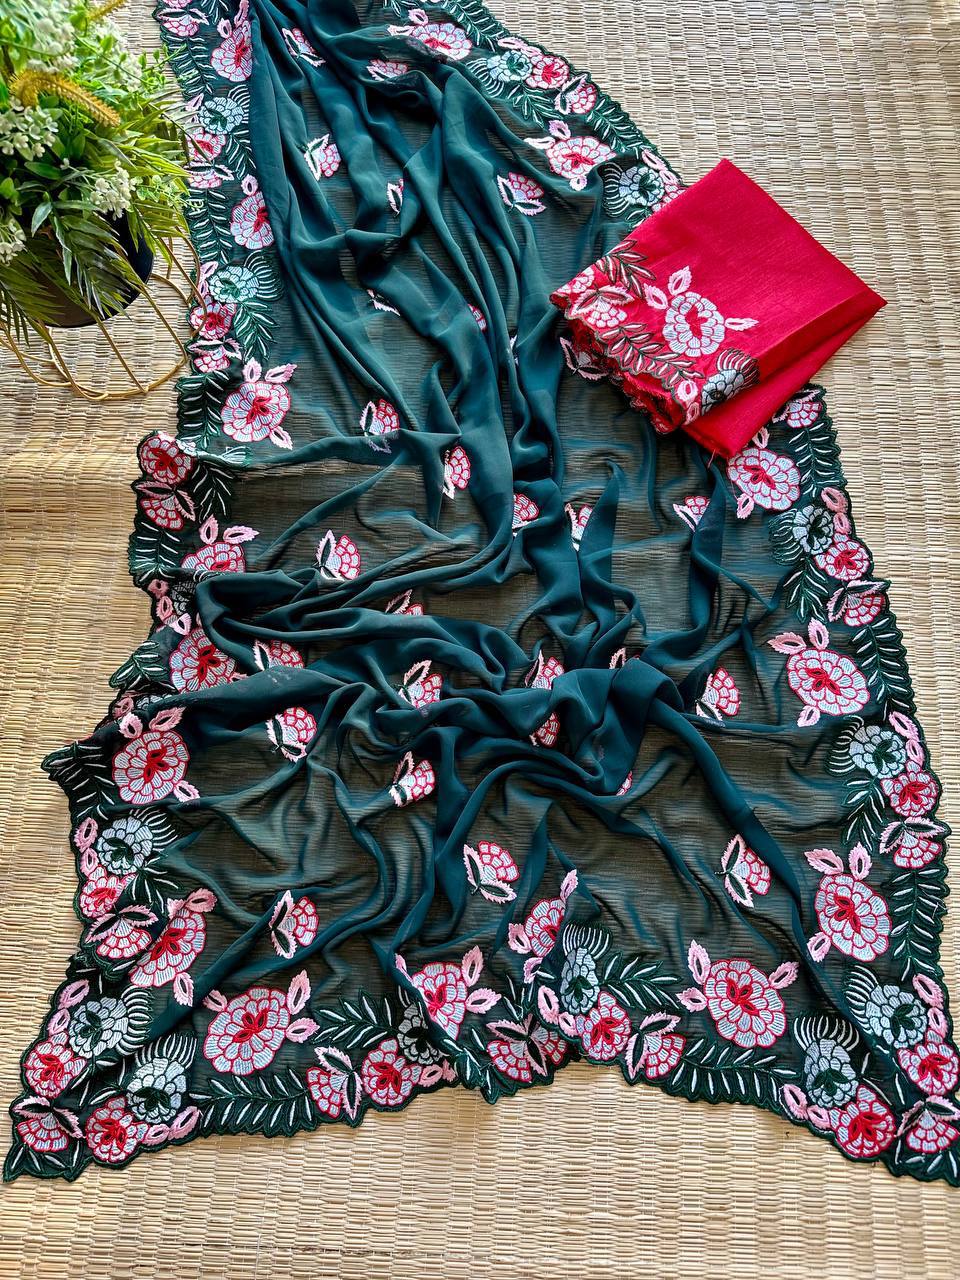 Rama Beautiful Georgett silk Sarees With Embroidery Cutwork Border